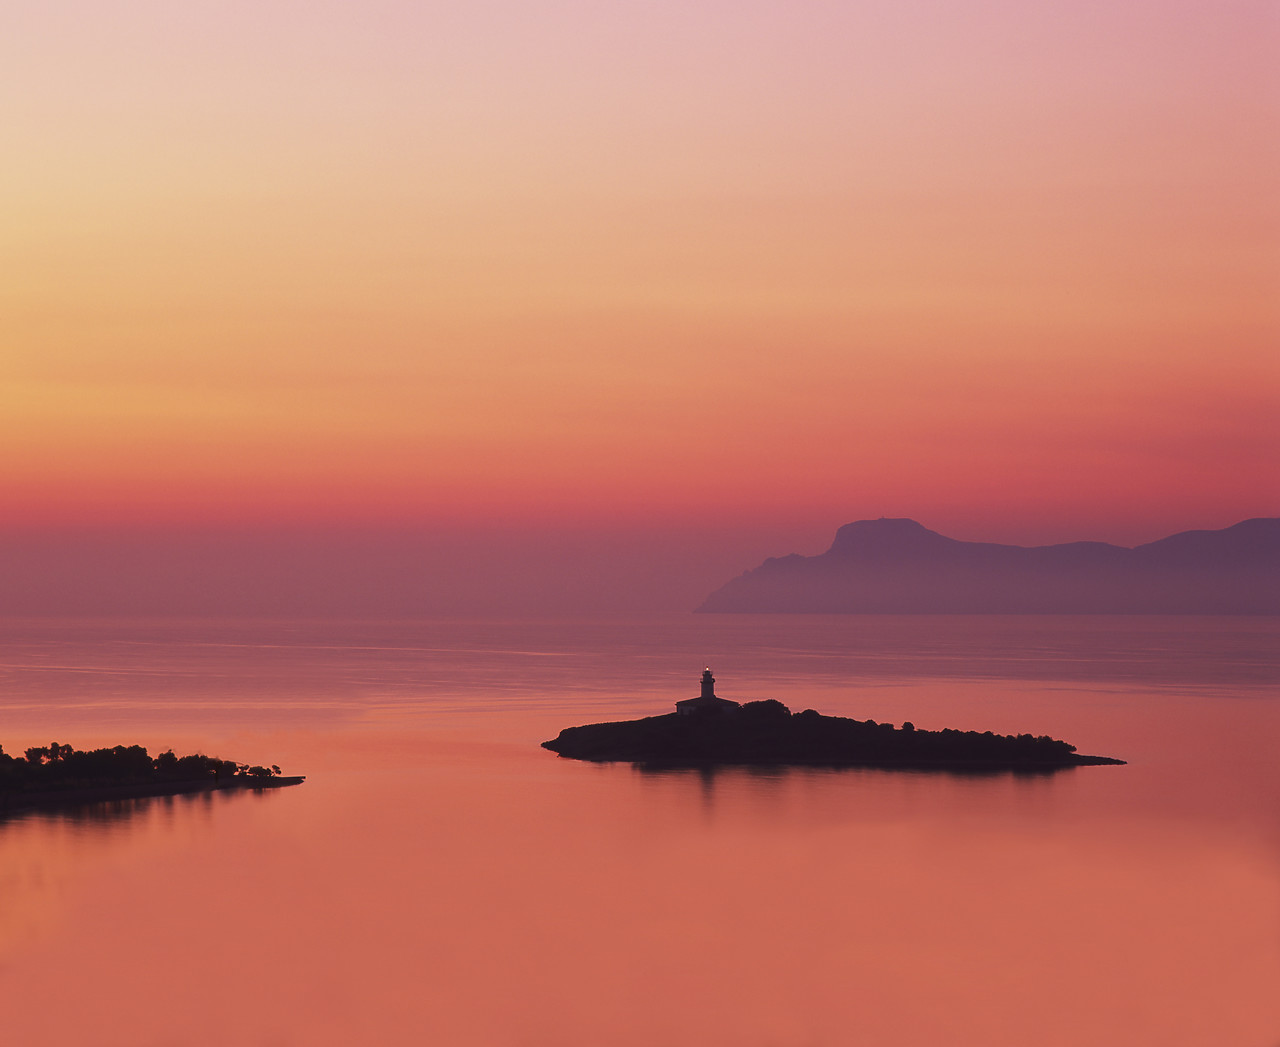 #050280-1 - Dawn View over Alcanada Island, Alcanada, Mellorca, Spain